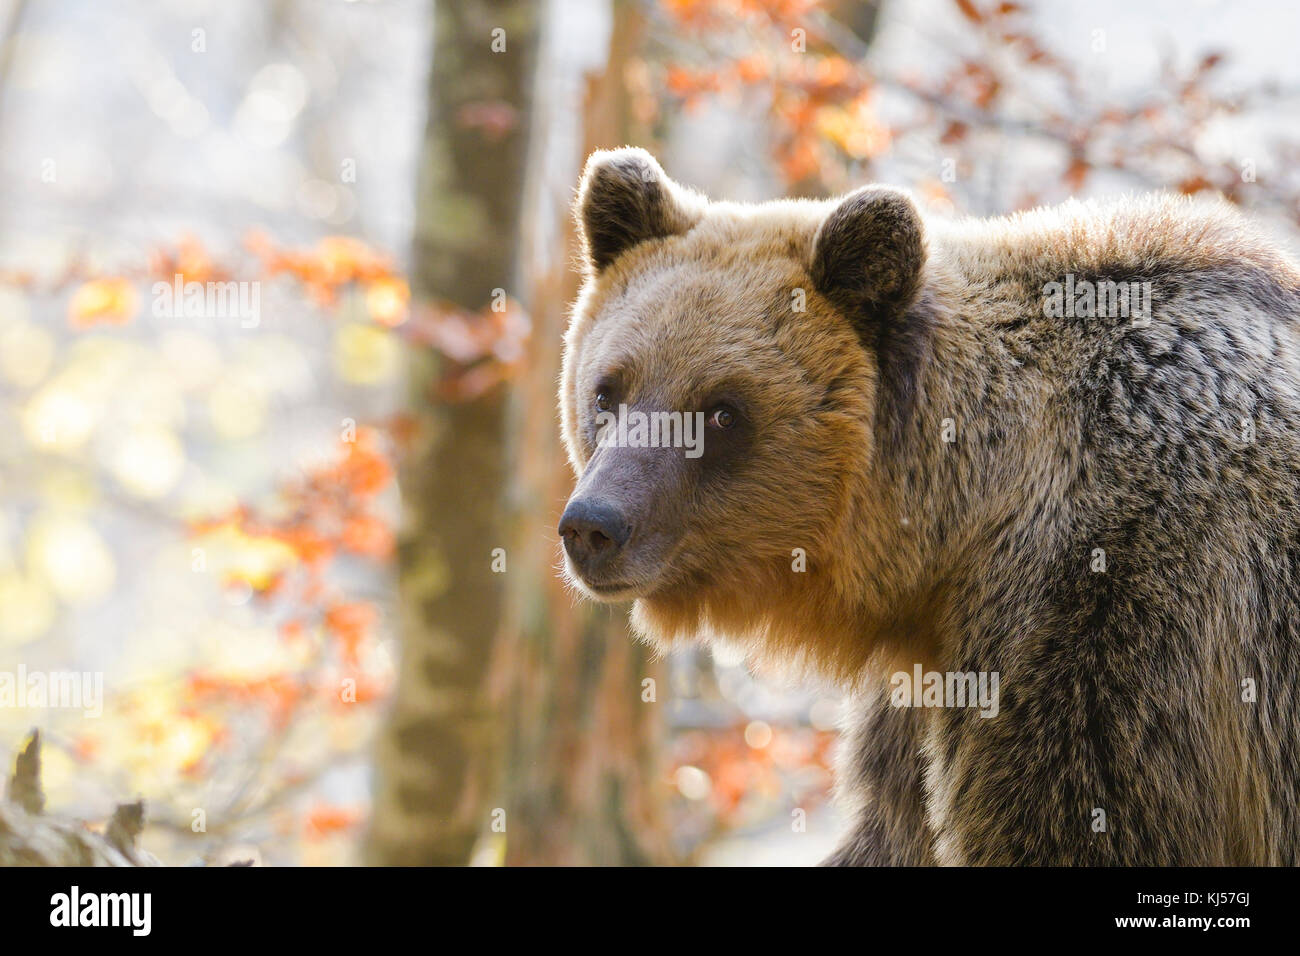 European brown bear or Eurasian brown bear (Ursus arctos arctos), animal portrait, Notranjska, Slovenia Stock Photo